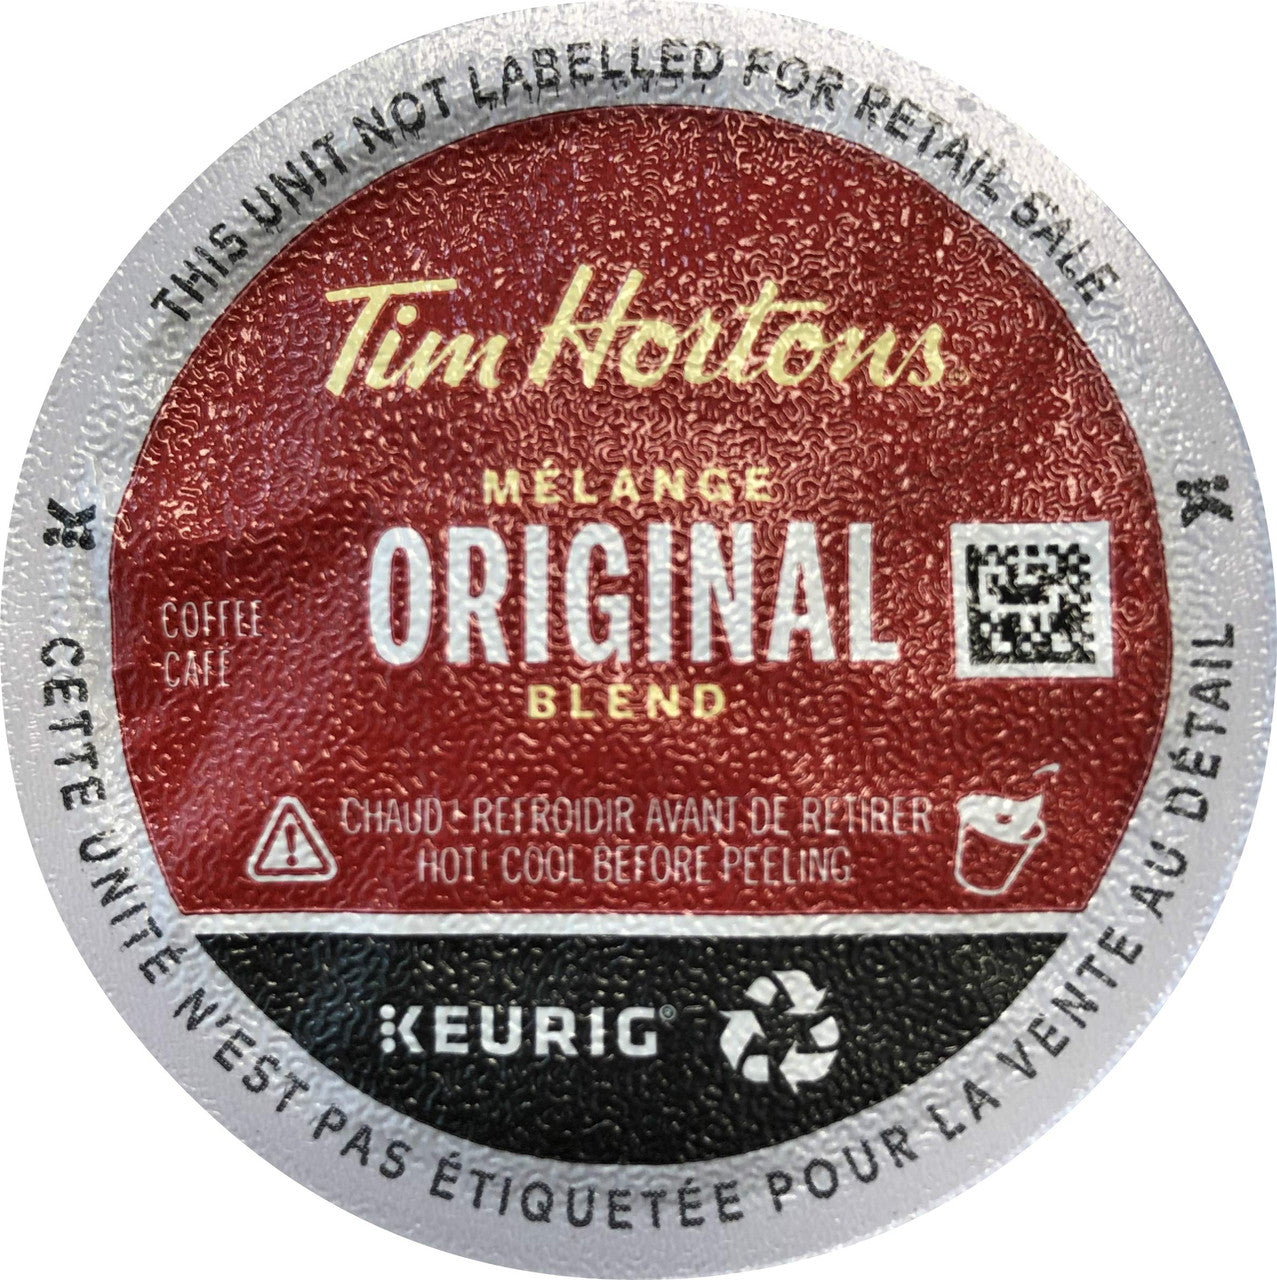 Tim Hortons Medium Roast Original Blend Coffee K-cup Pods - 72ct